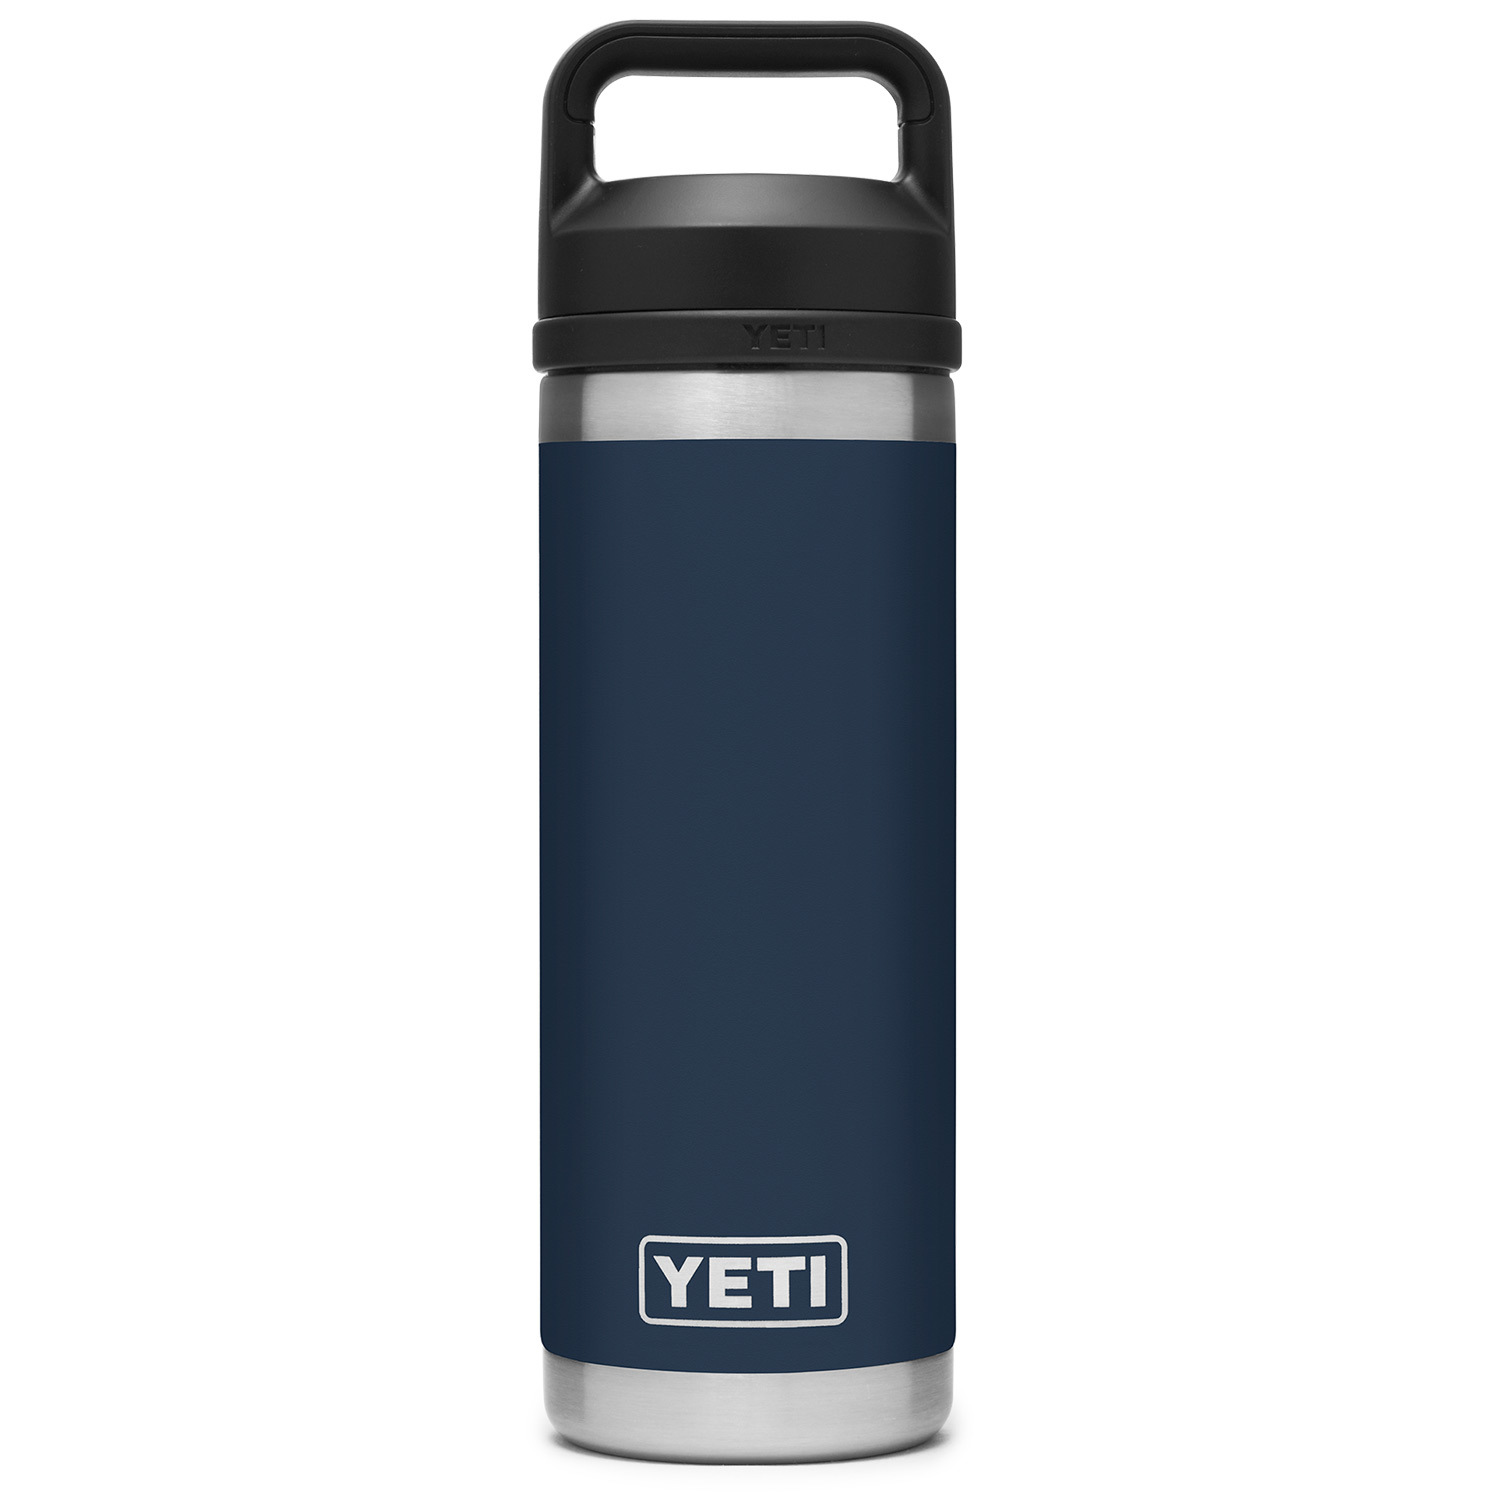 YETI / Rambler 18 oz Bottle With Chug Cap - Coral